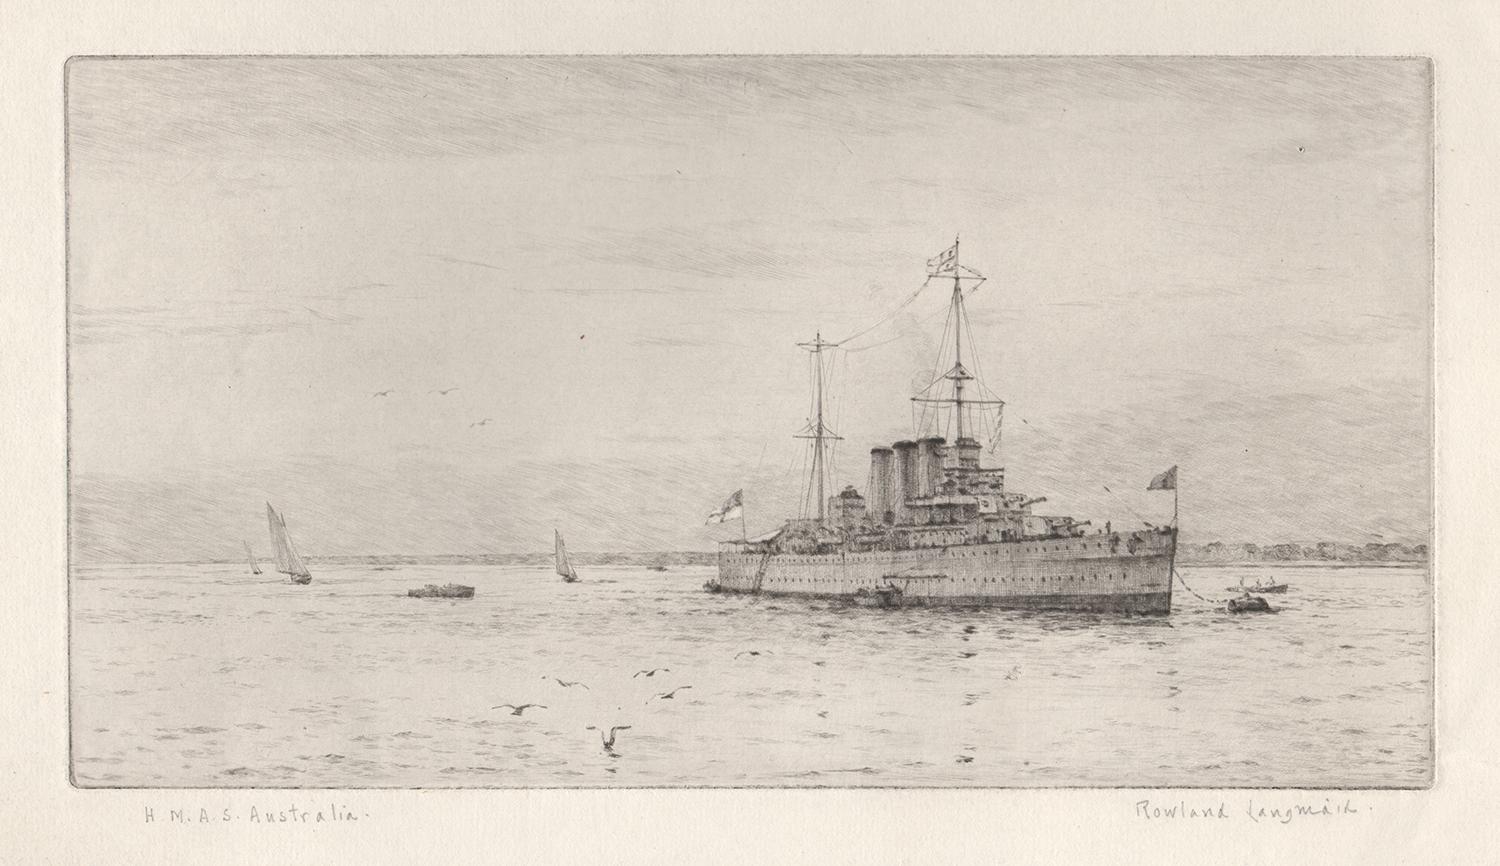 HMAS Australia. Rowland Langmaid vintage signed naval ship etching print